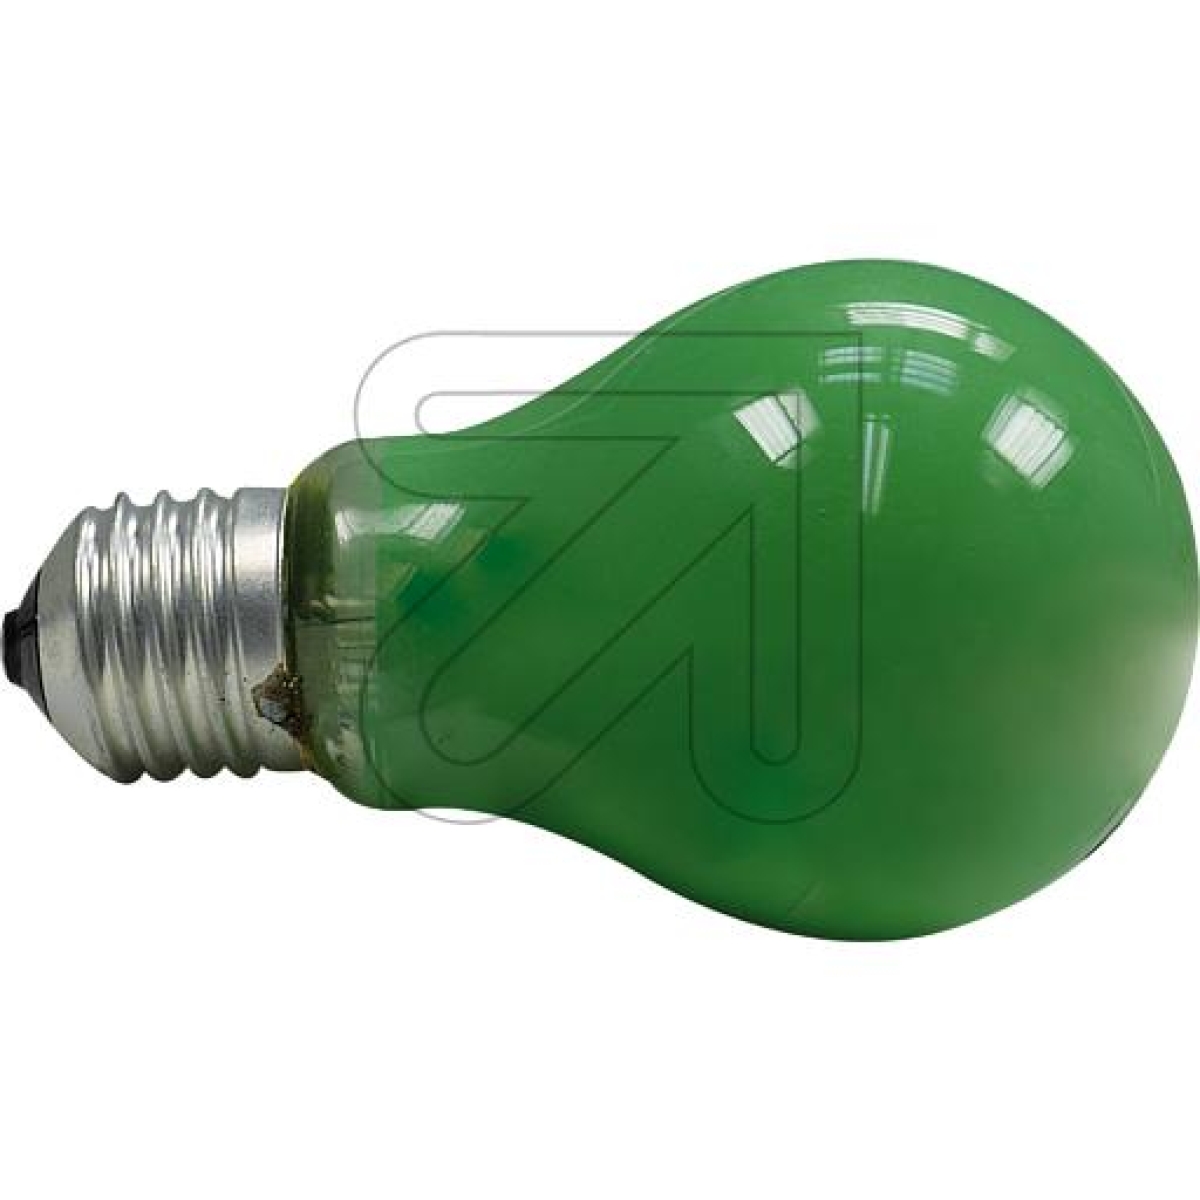 LEDmaxxGeneral service lamp E27 25W green gg106652Article-No: 511815